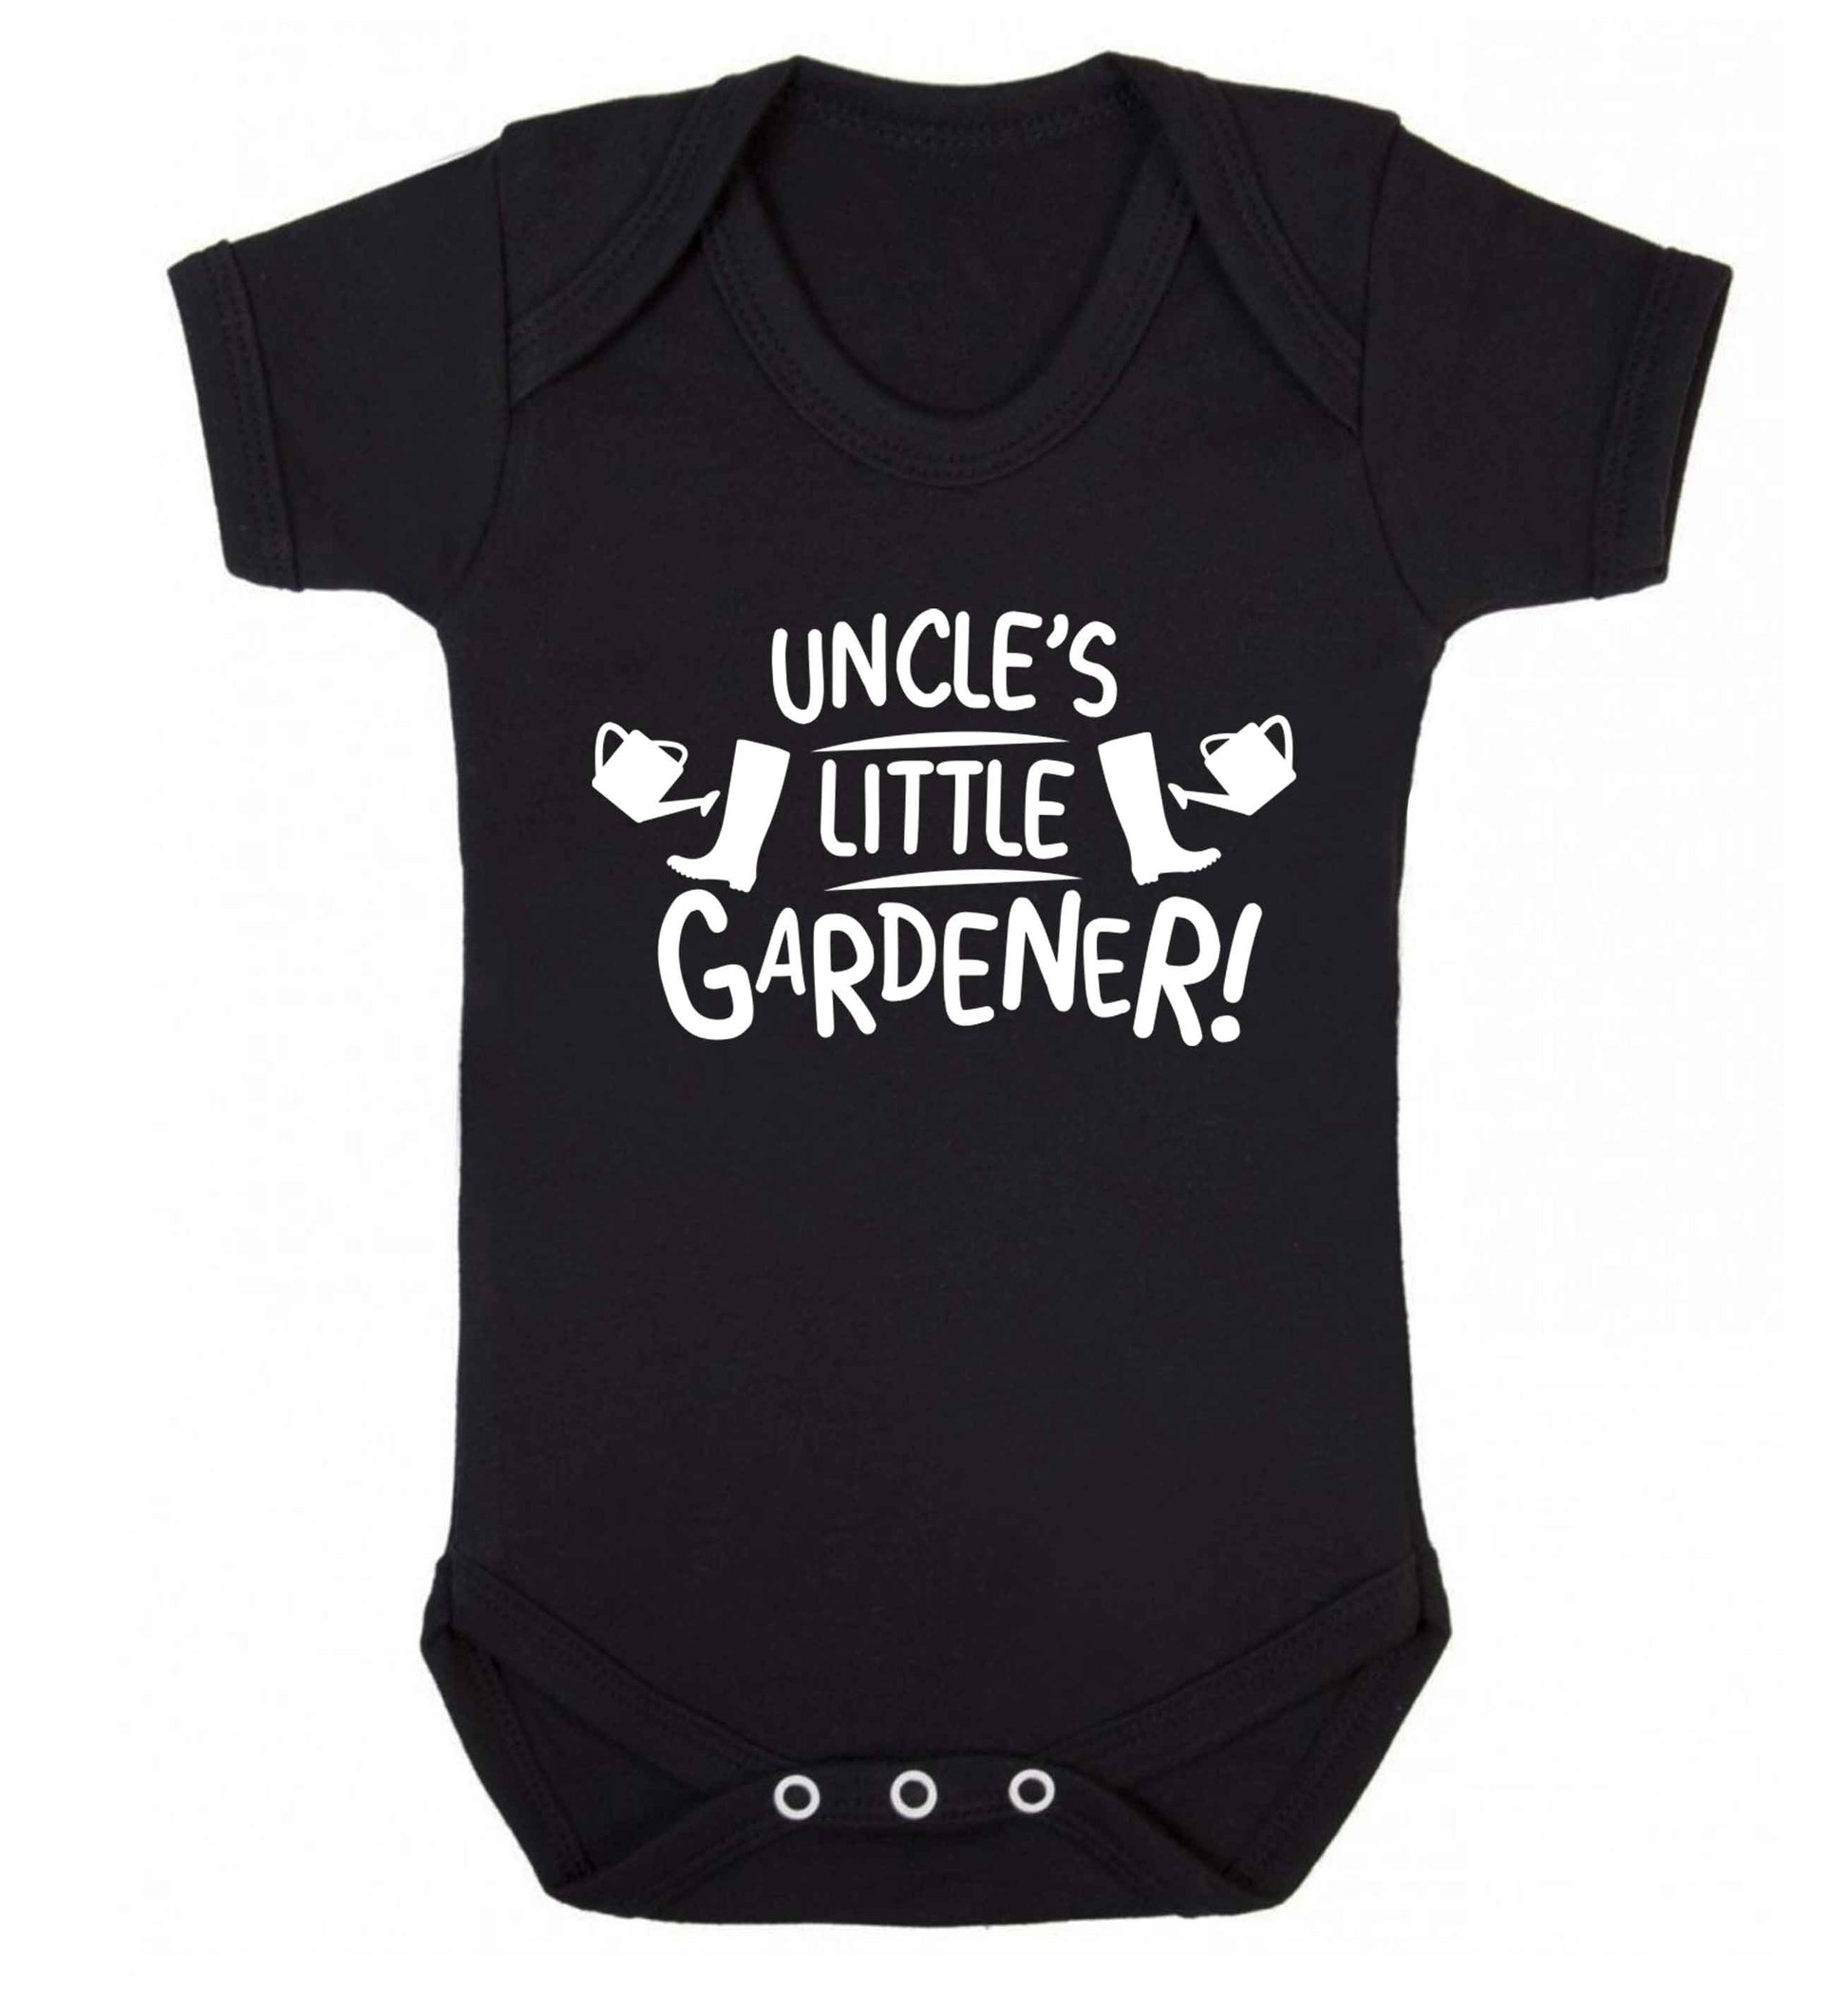 Uncle's little gardener Baby Vest black 18-24 months